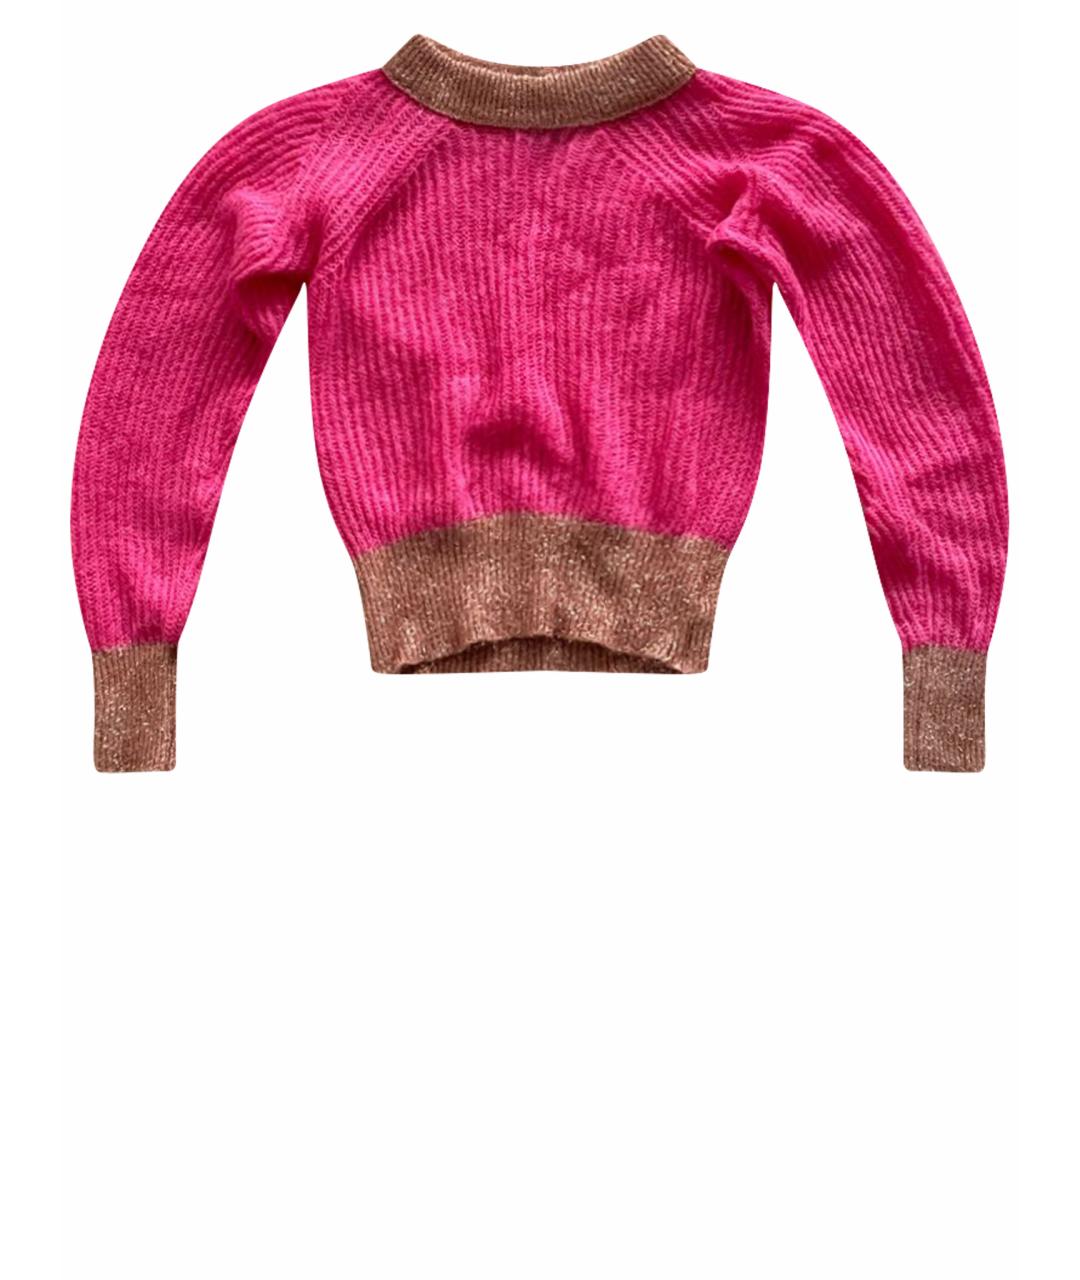 PINKO Розовый джемпер / свитер, фото 1